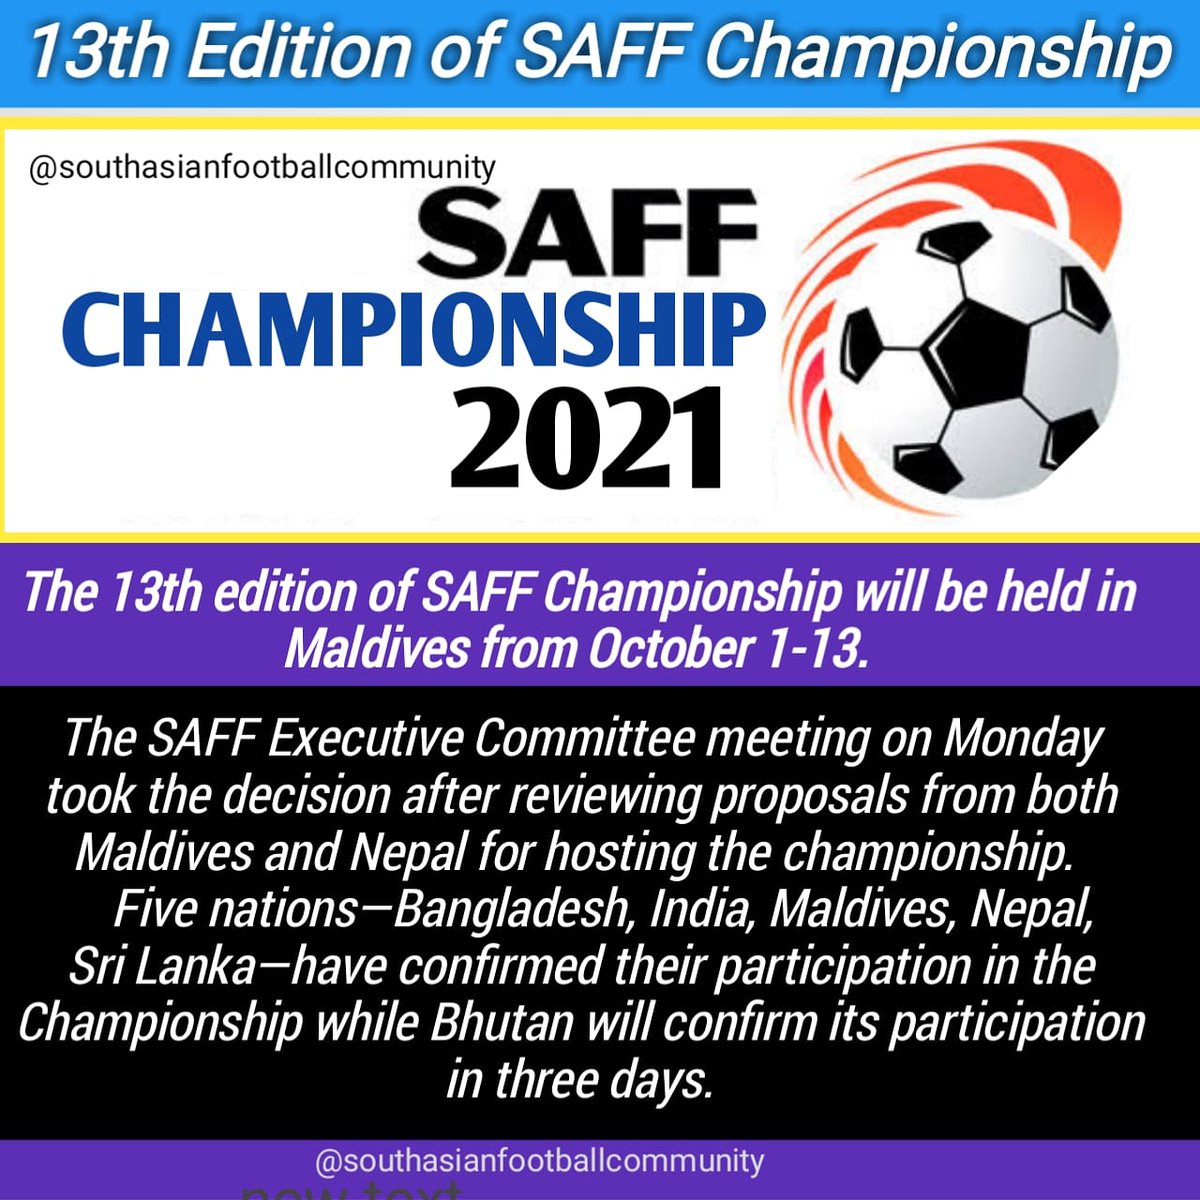 #BreakingNews

Maldives🇲🇻 will host 13th edition of SAFF Championship from 1 October to 13 October 

#SAFF2021 #SAFFchampionship #SouthAsianFootball